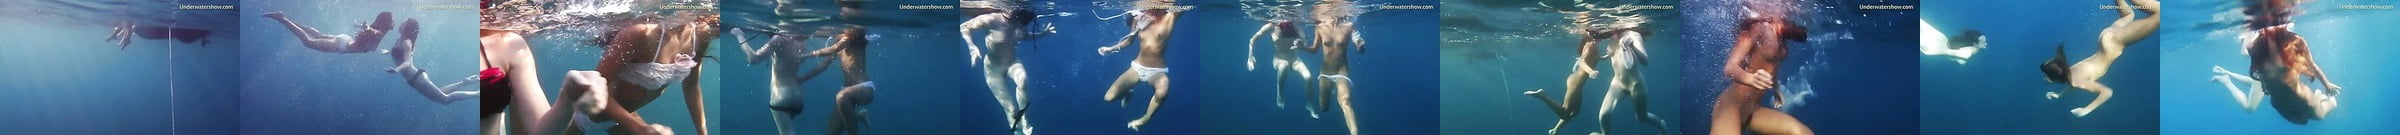 Naked Swingers At Sea 15 Pics Xhamster